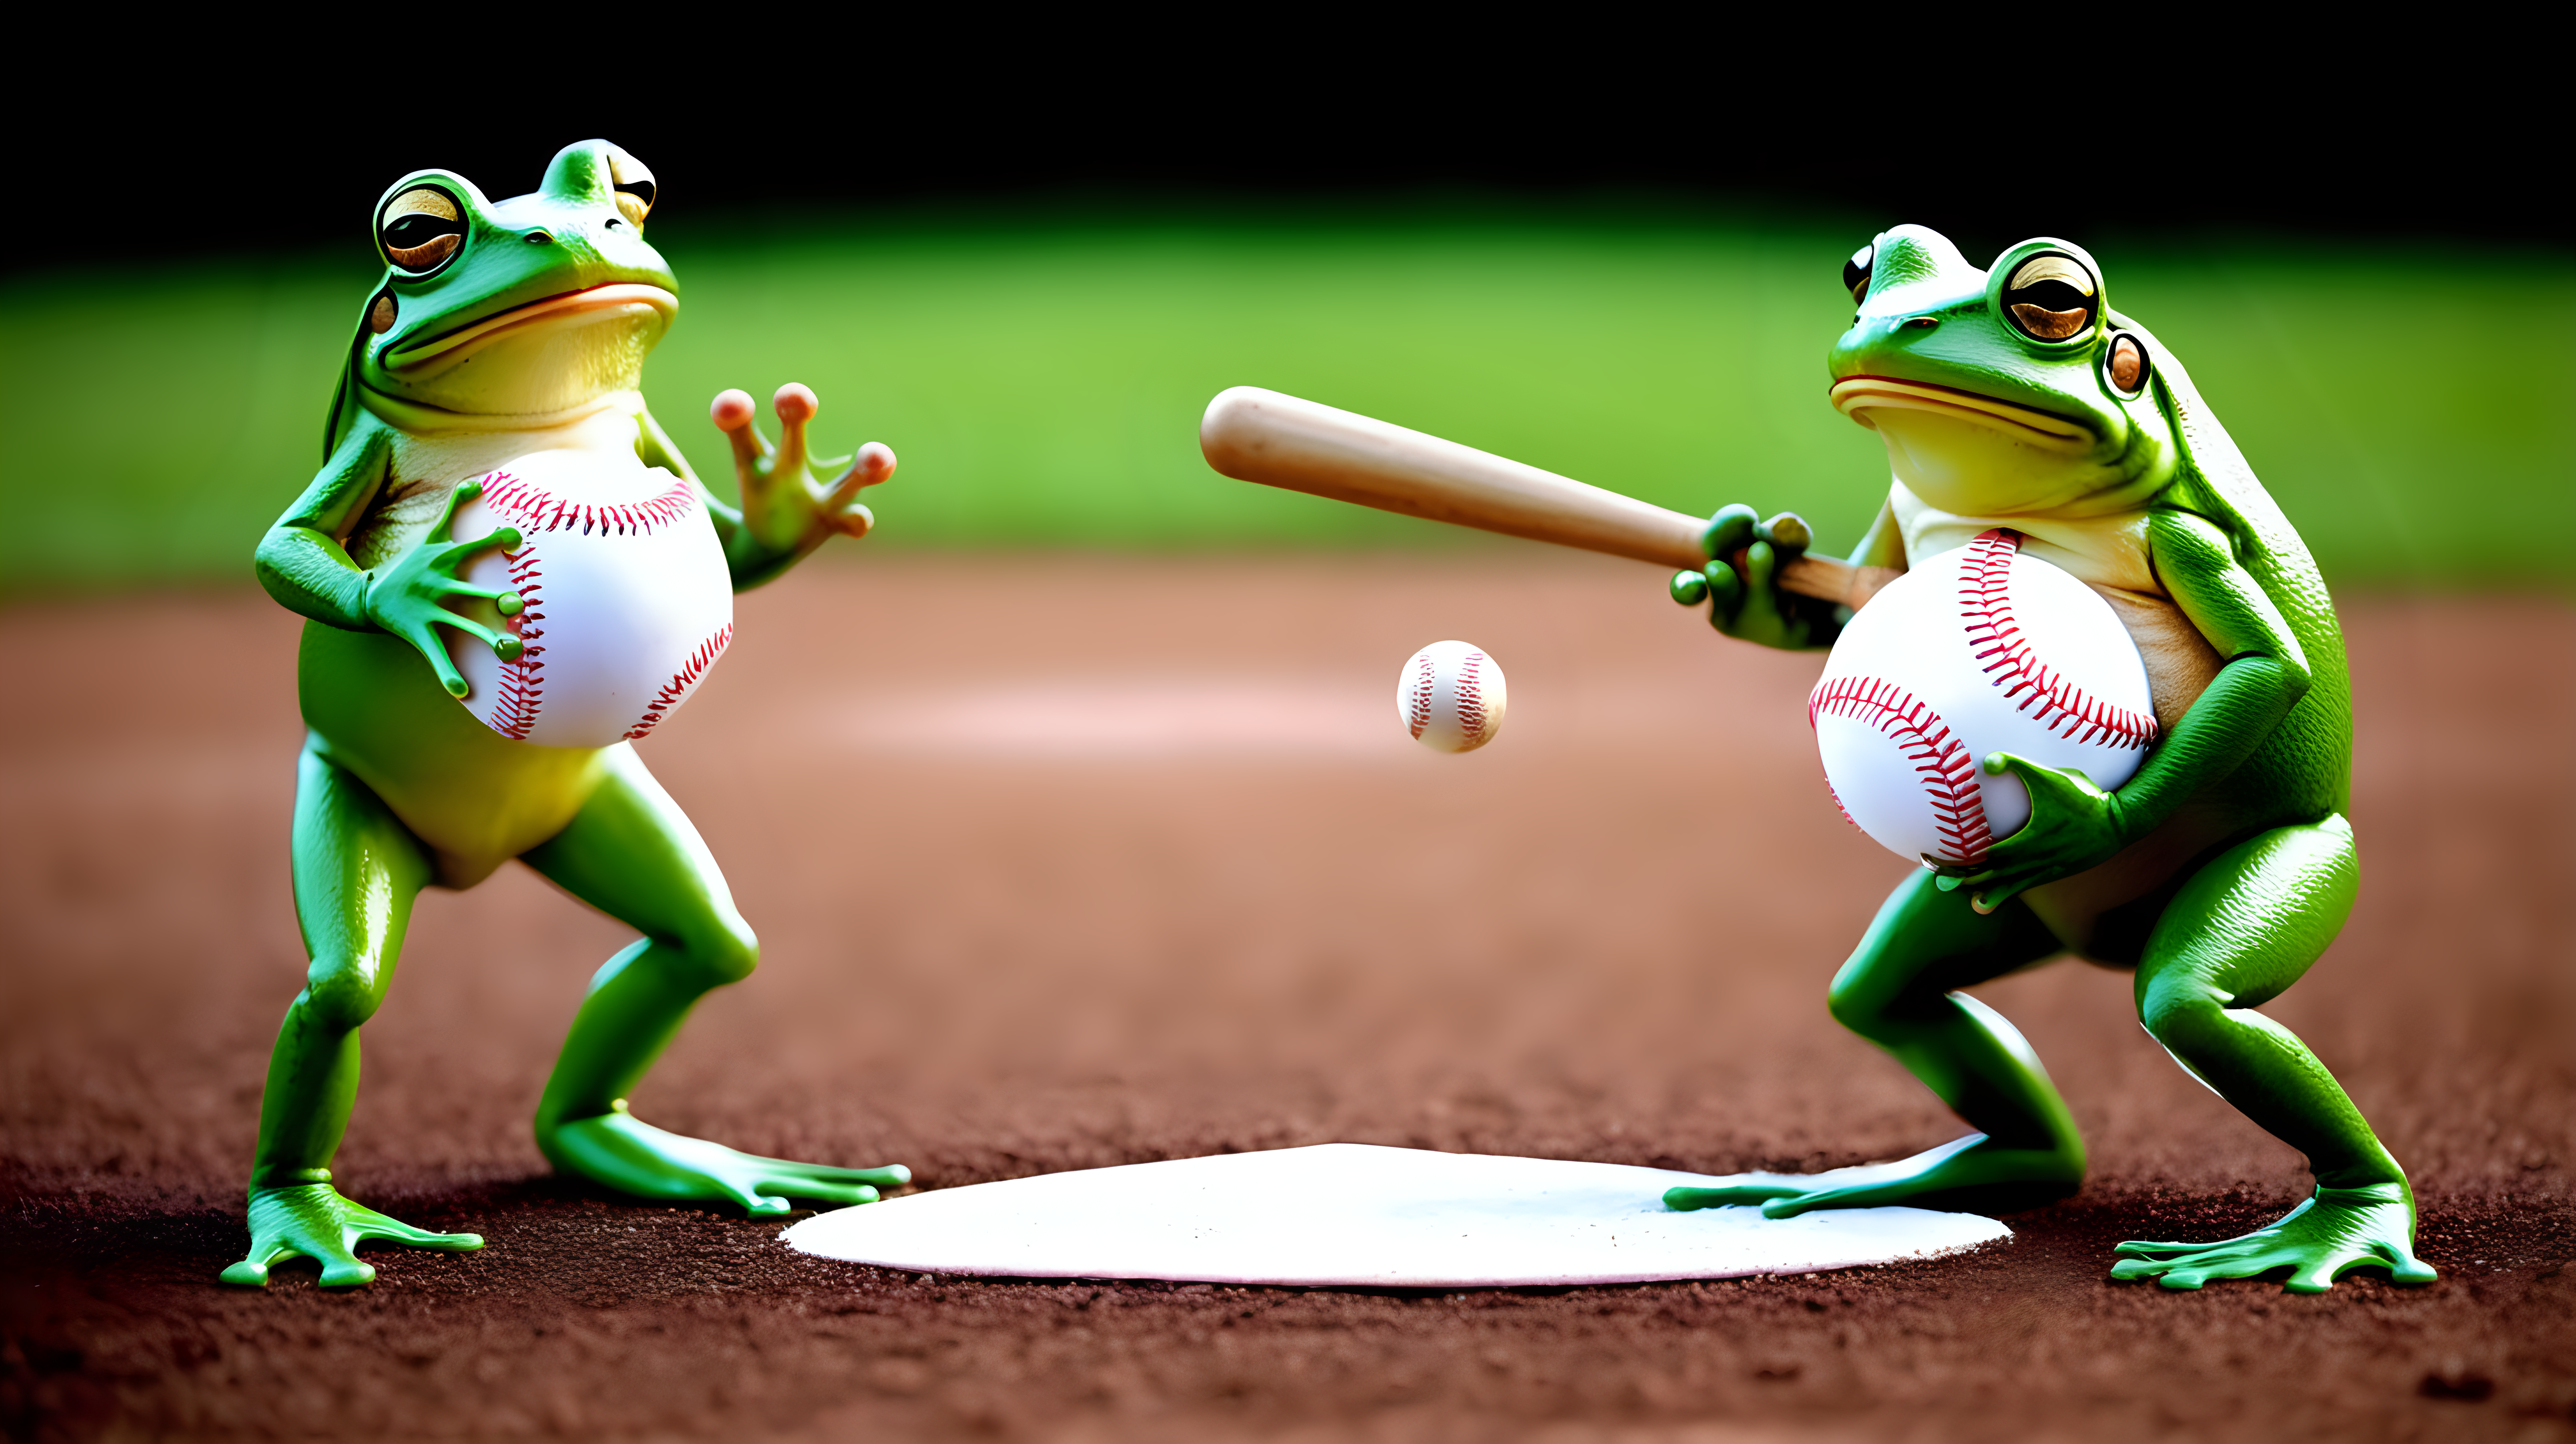 frogs playing baseball